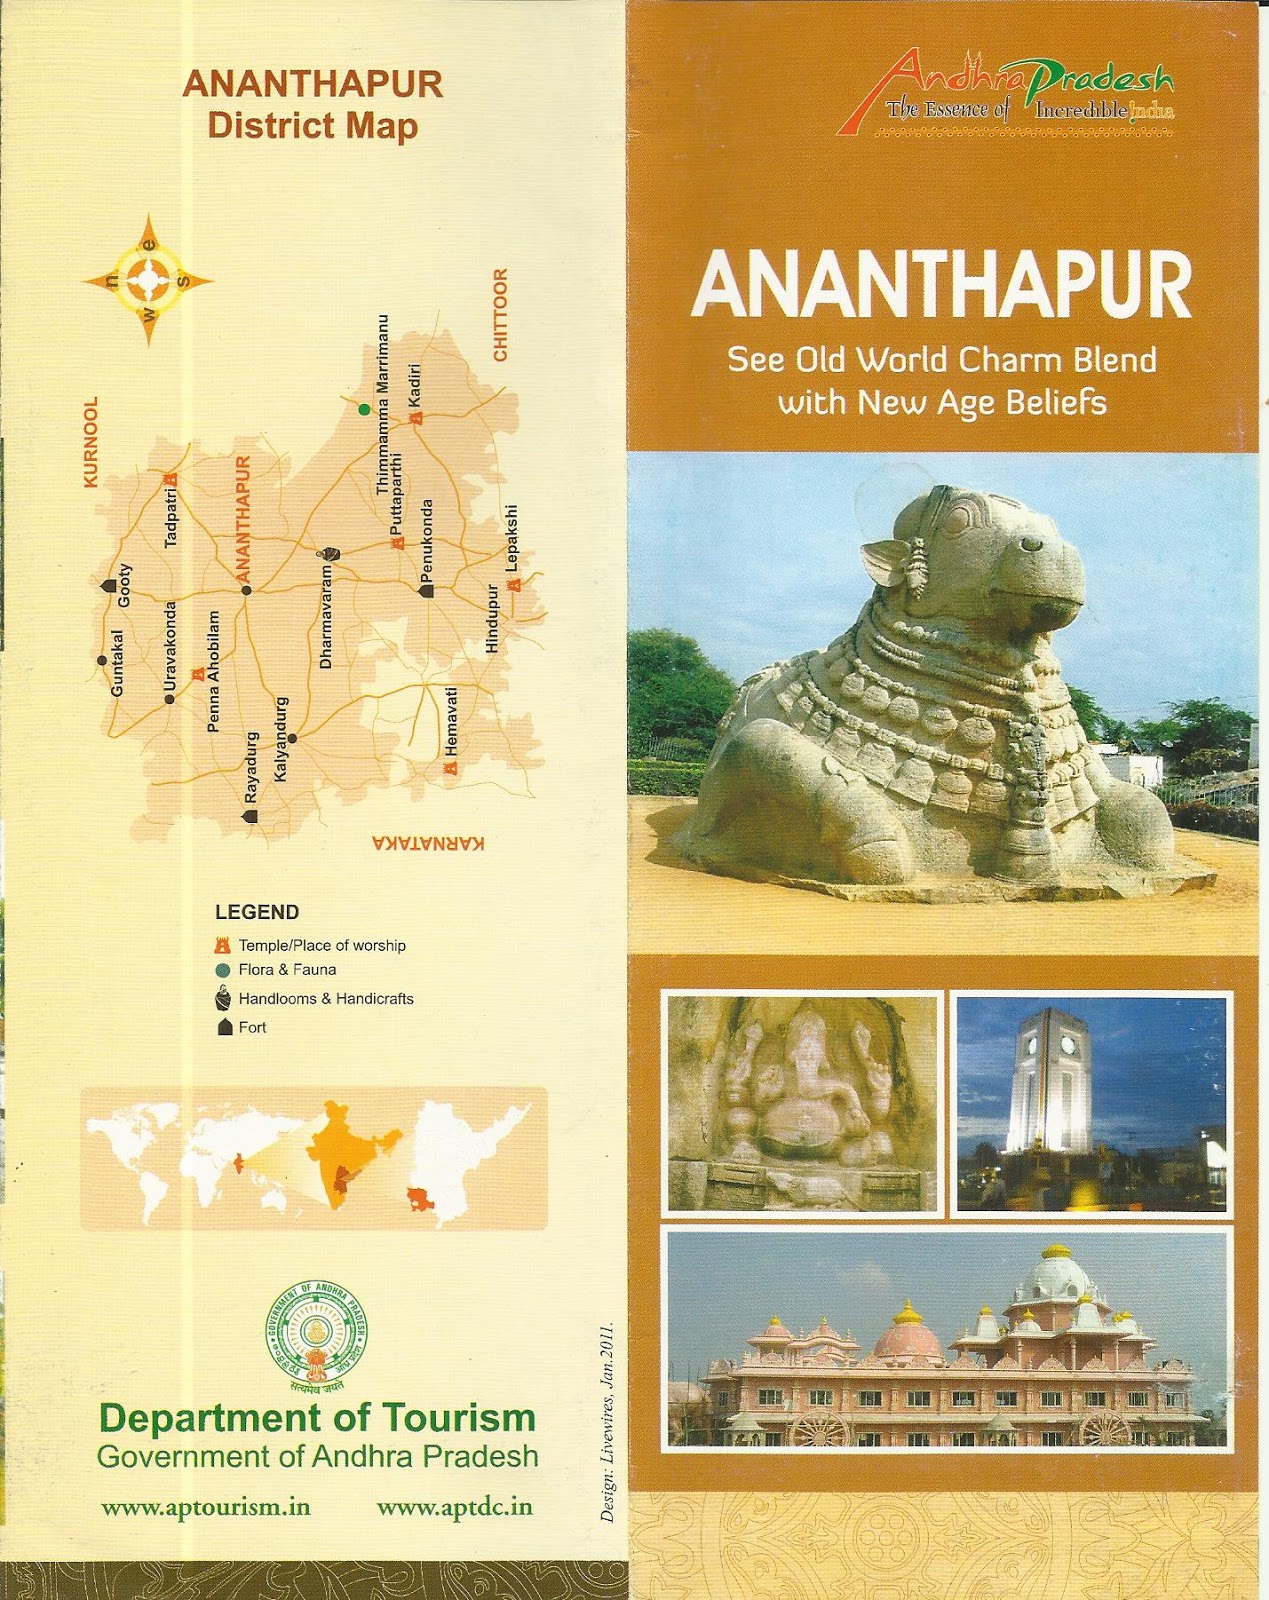 india travel brochure